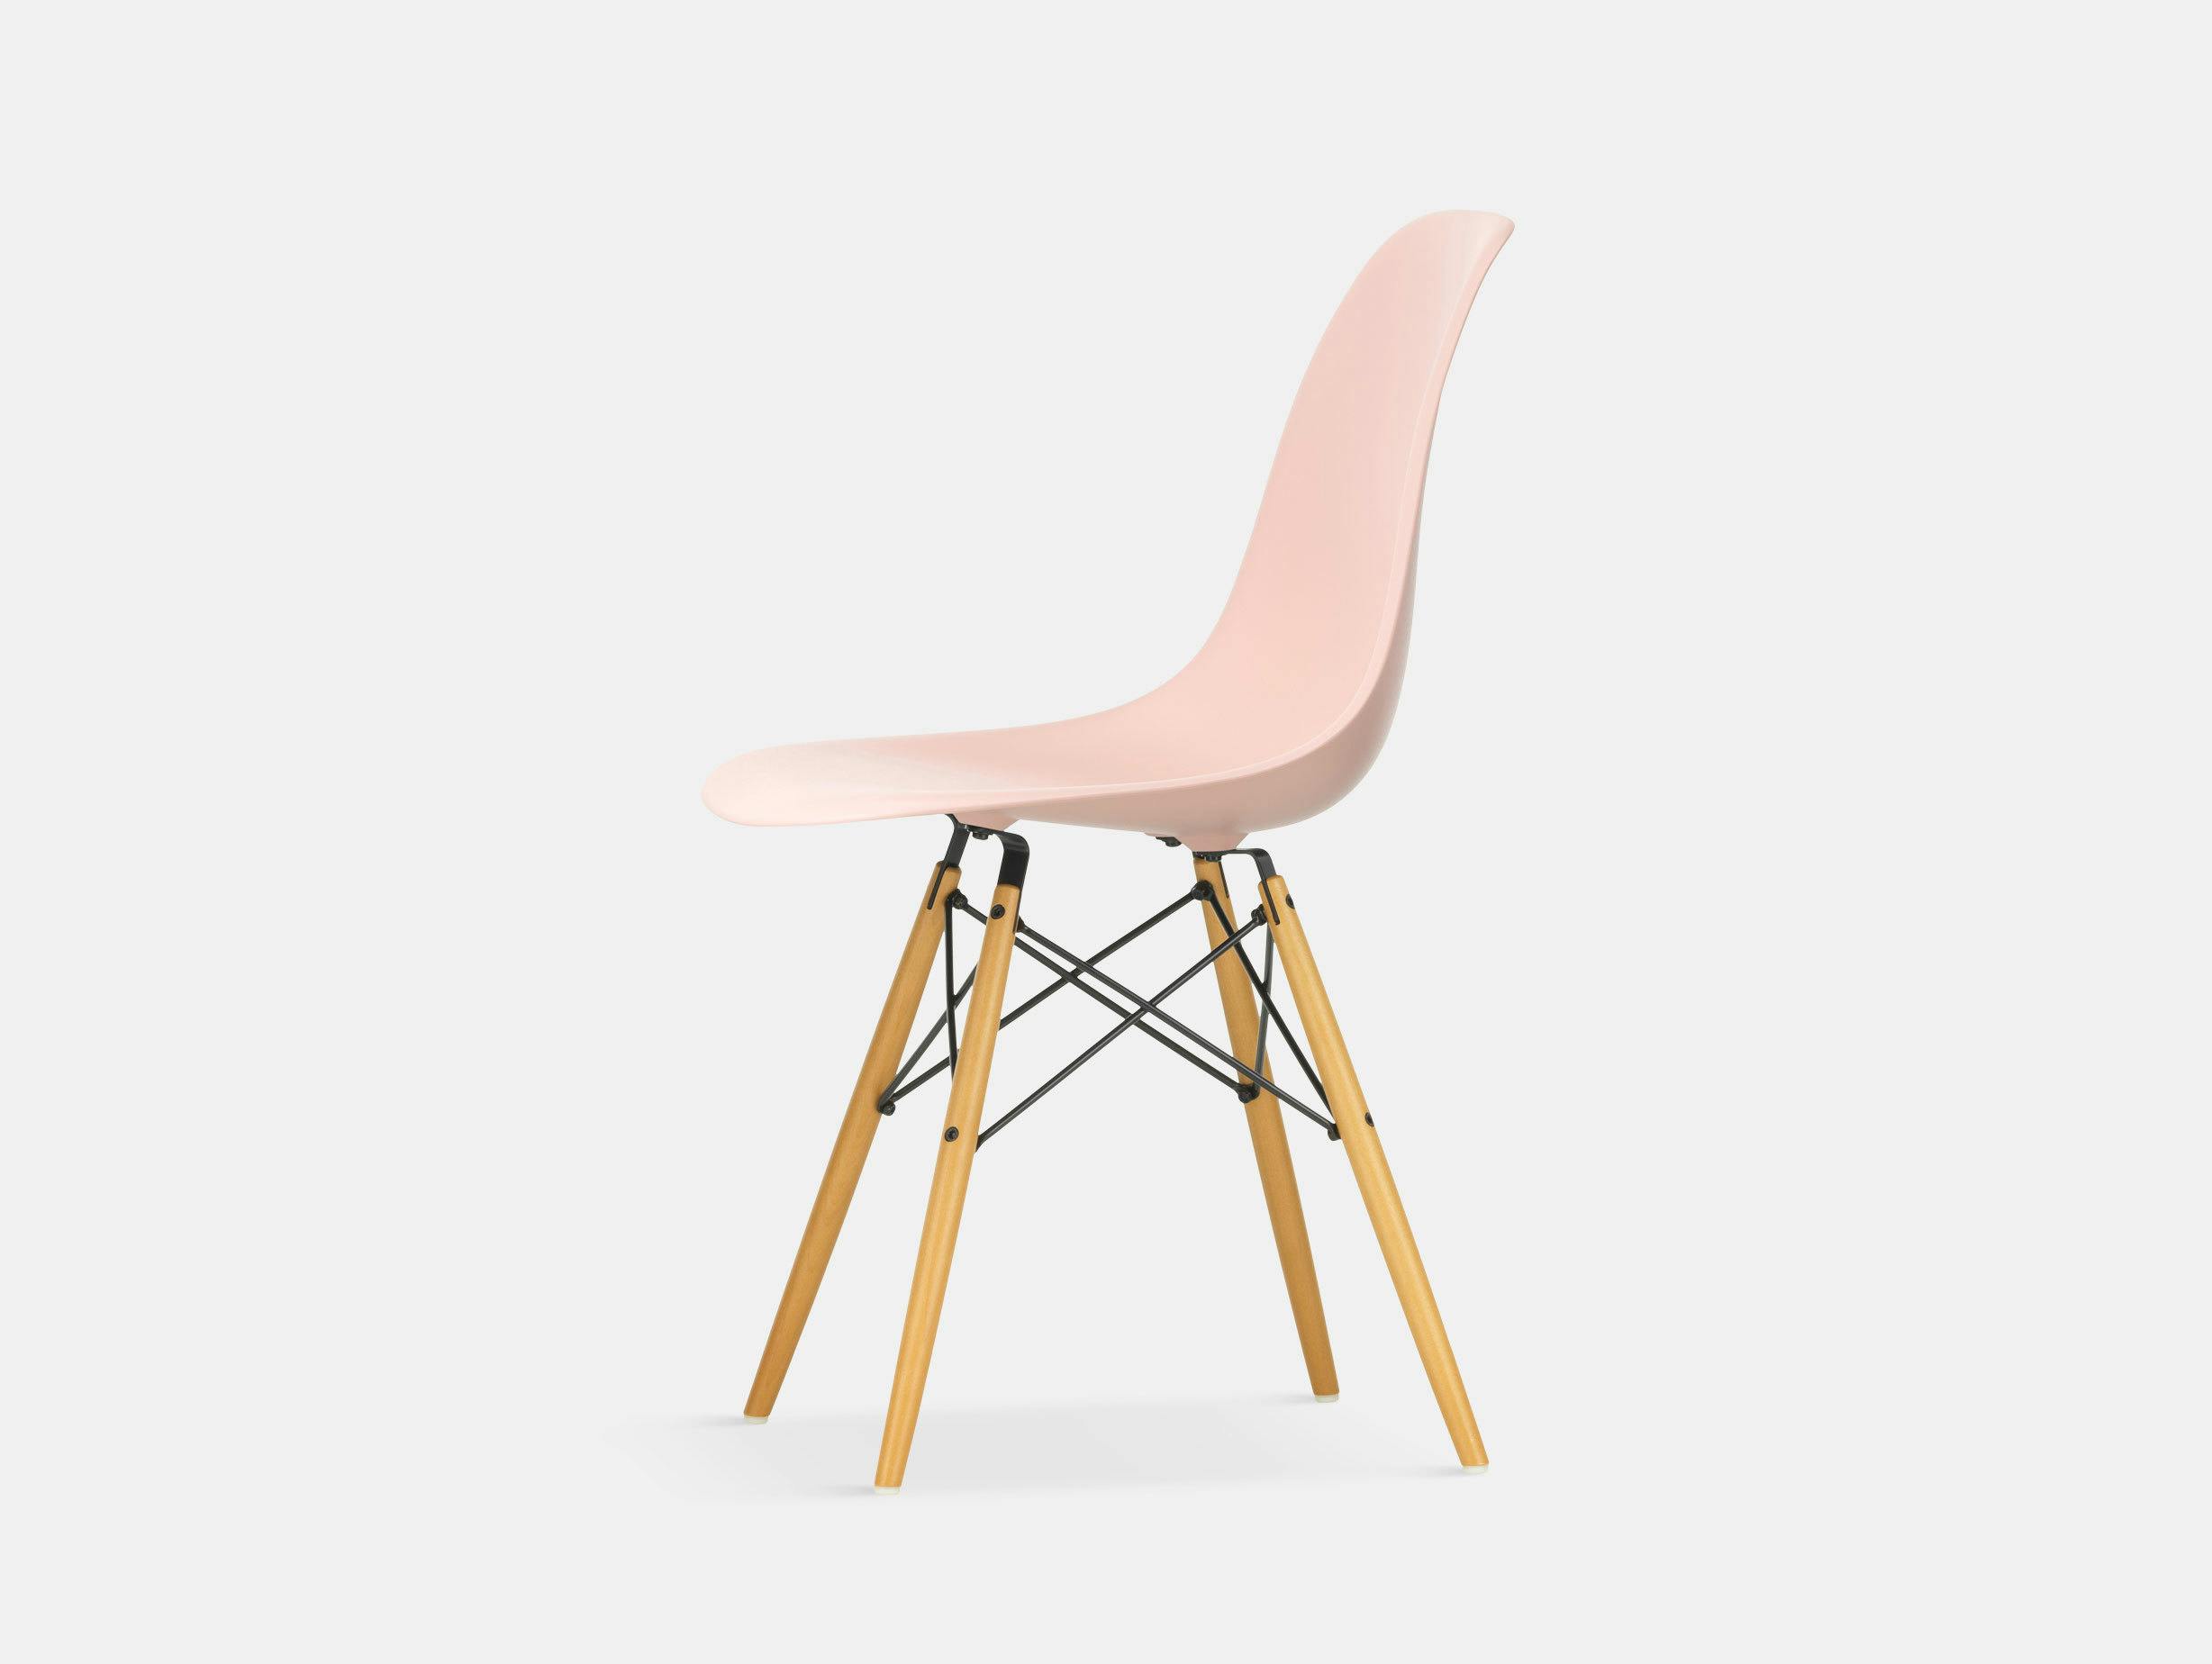 Vitra Eames DSW Plastic Side Chair pale rose golden maple legs